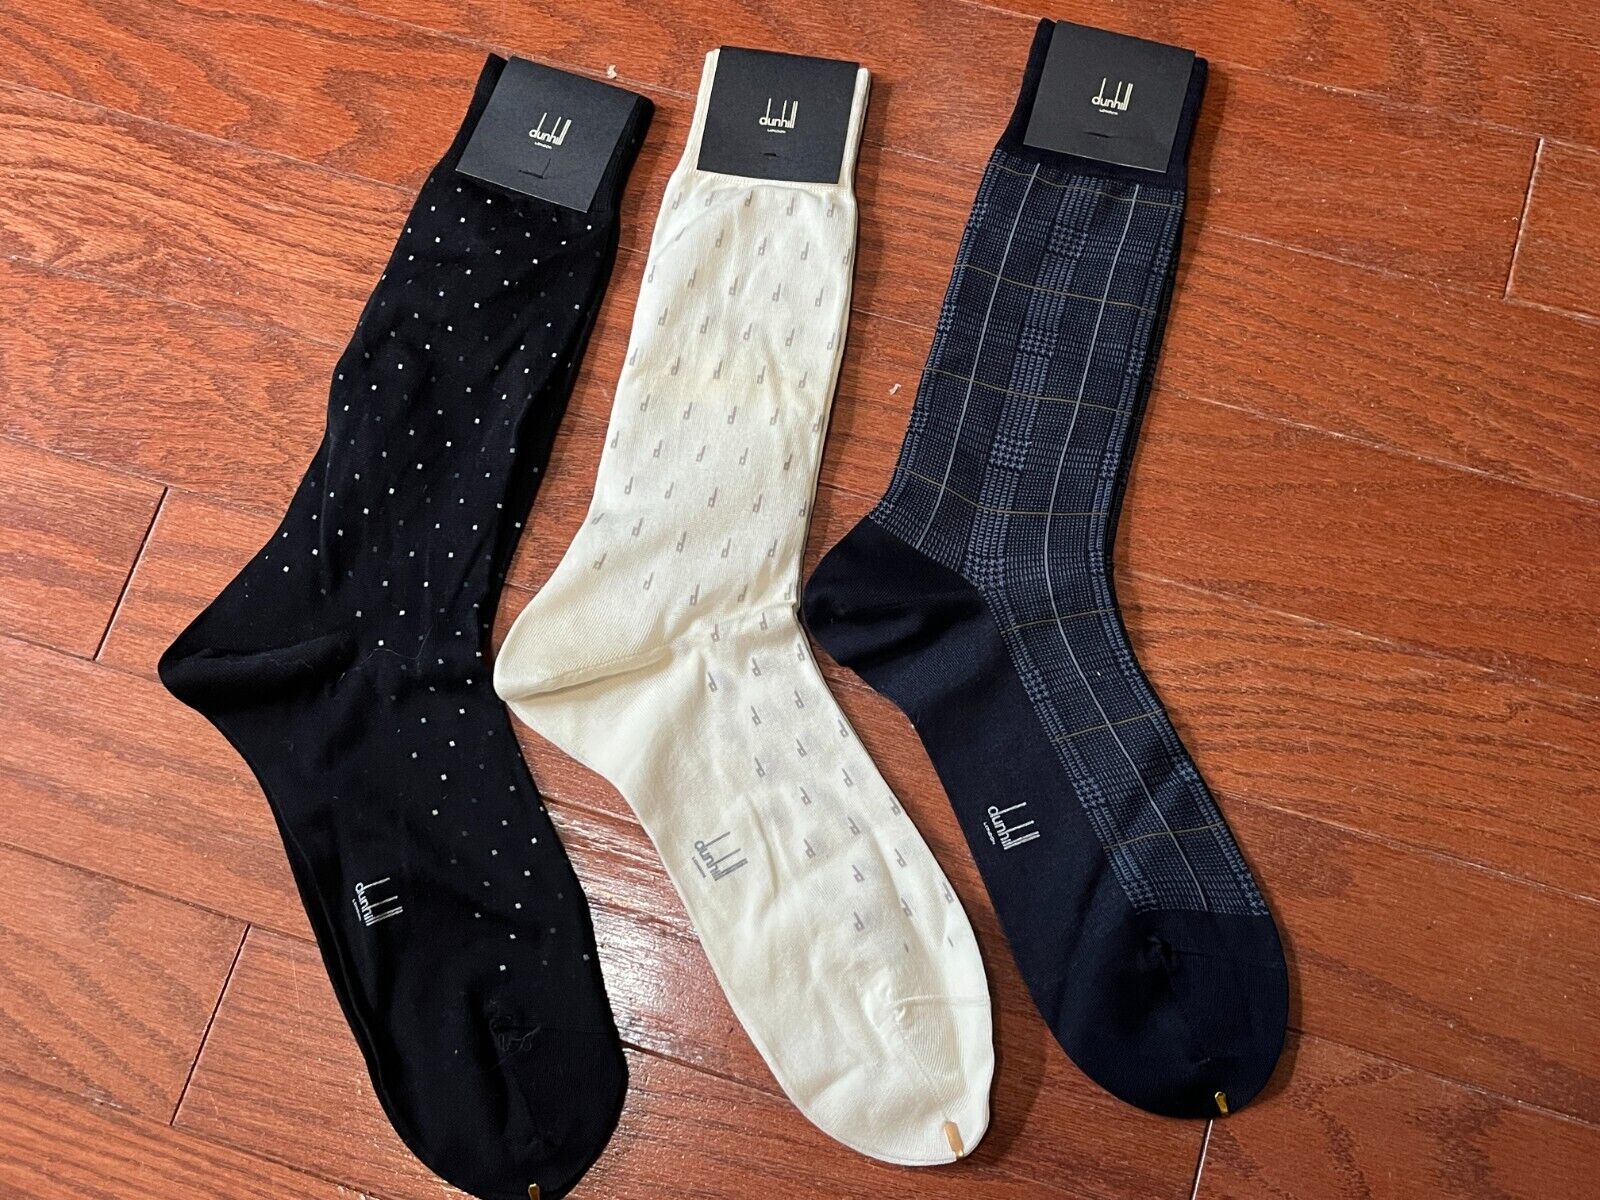 Judd's Lot of 3 NEW Dunhill Dress Socks - Size 25